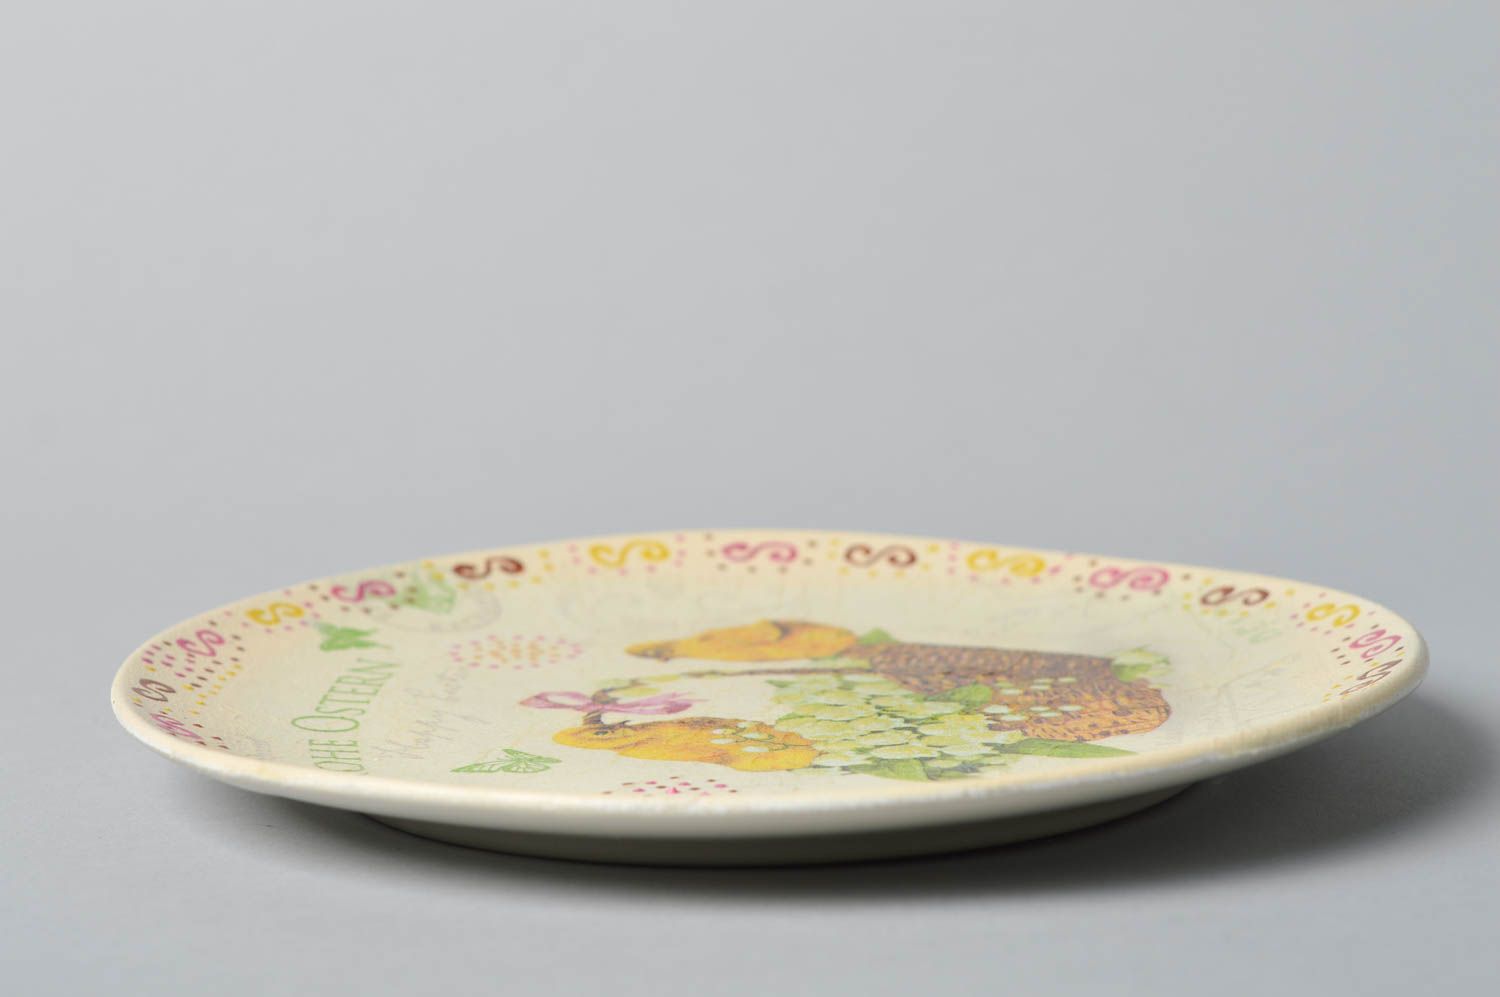 Plato de cerámica artesanal utensilio de cocina menaje del hogar decoupage foto 4